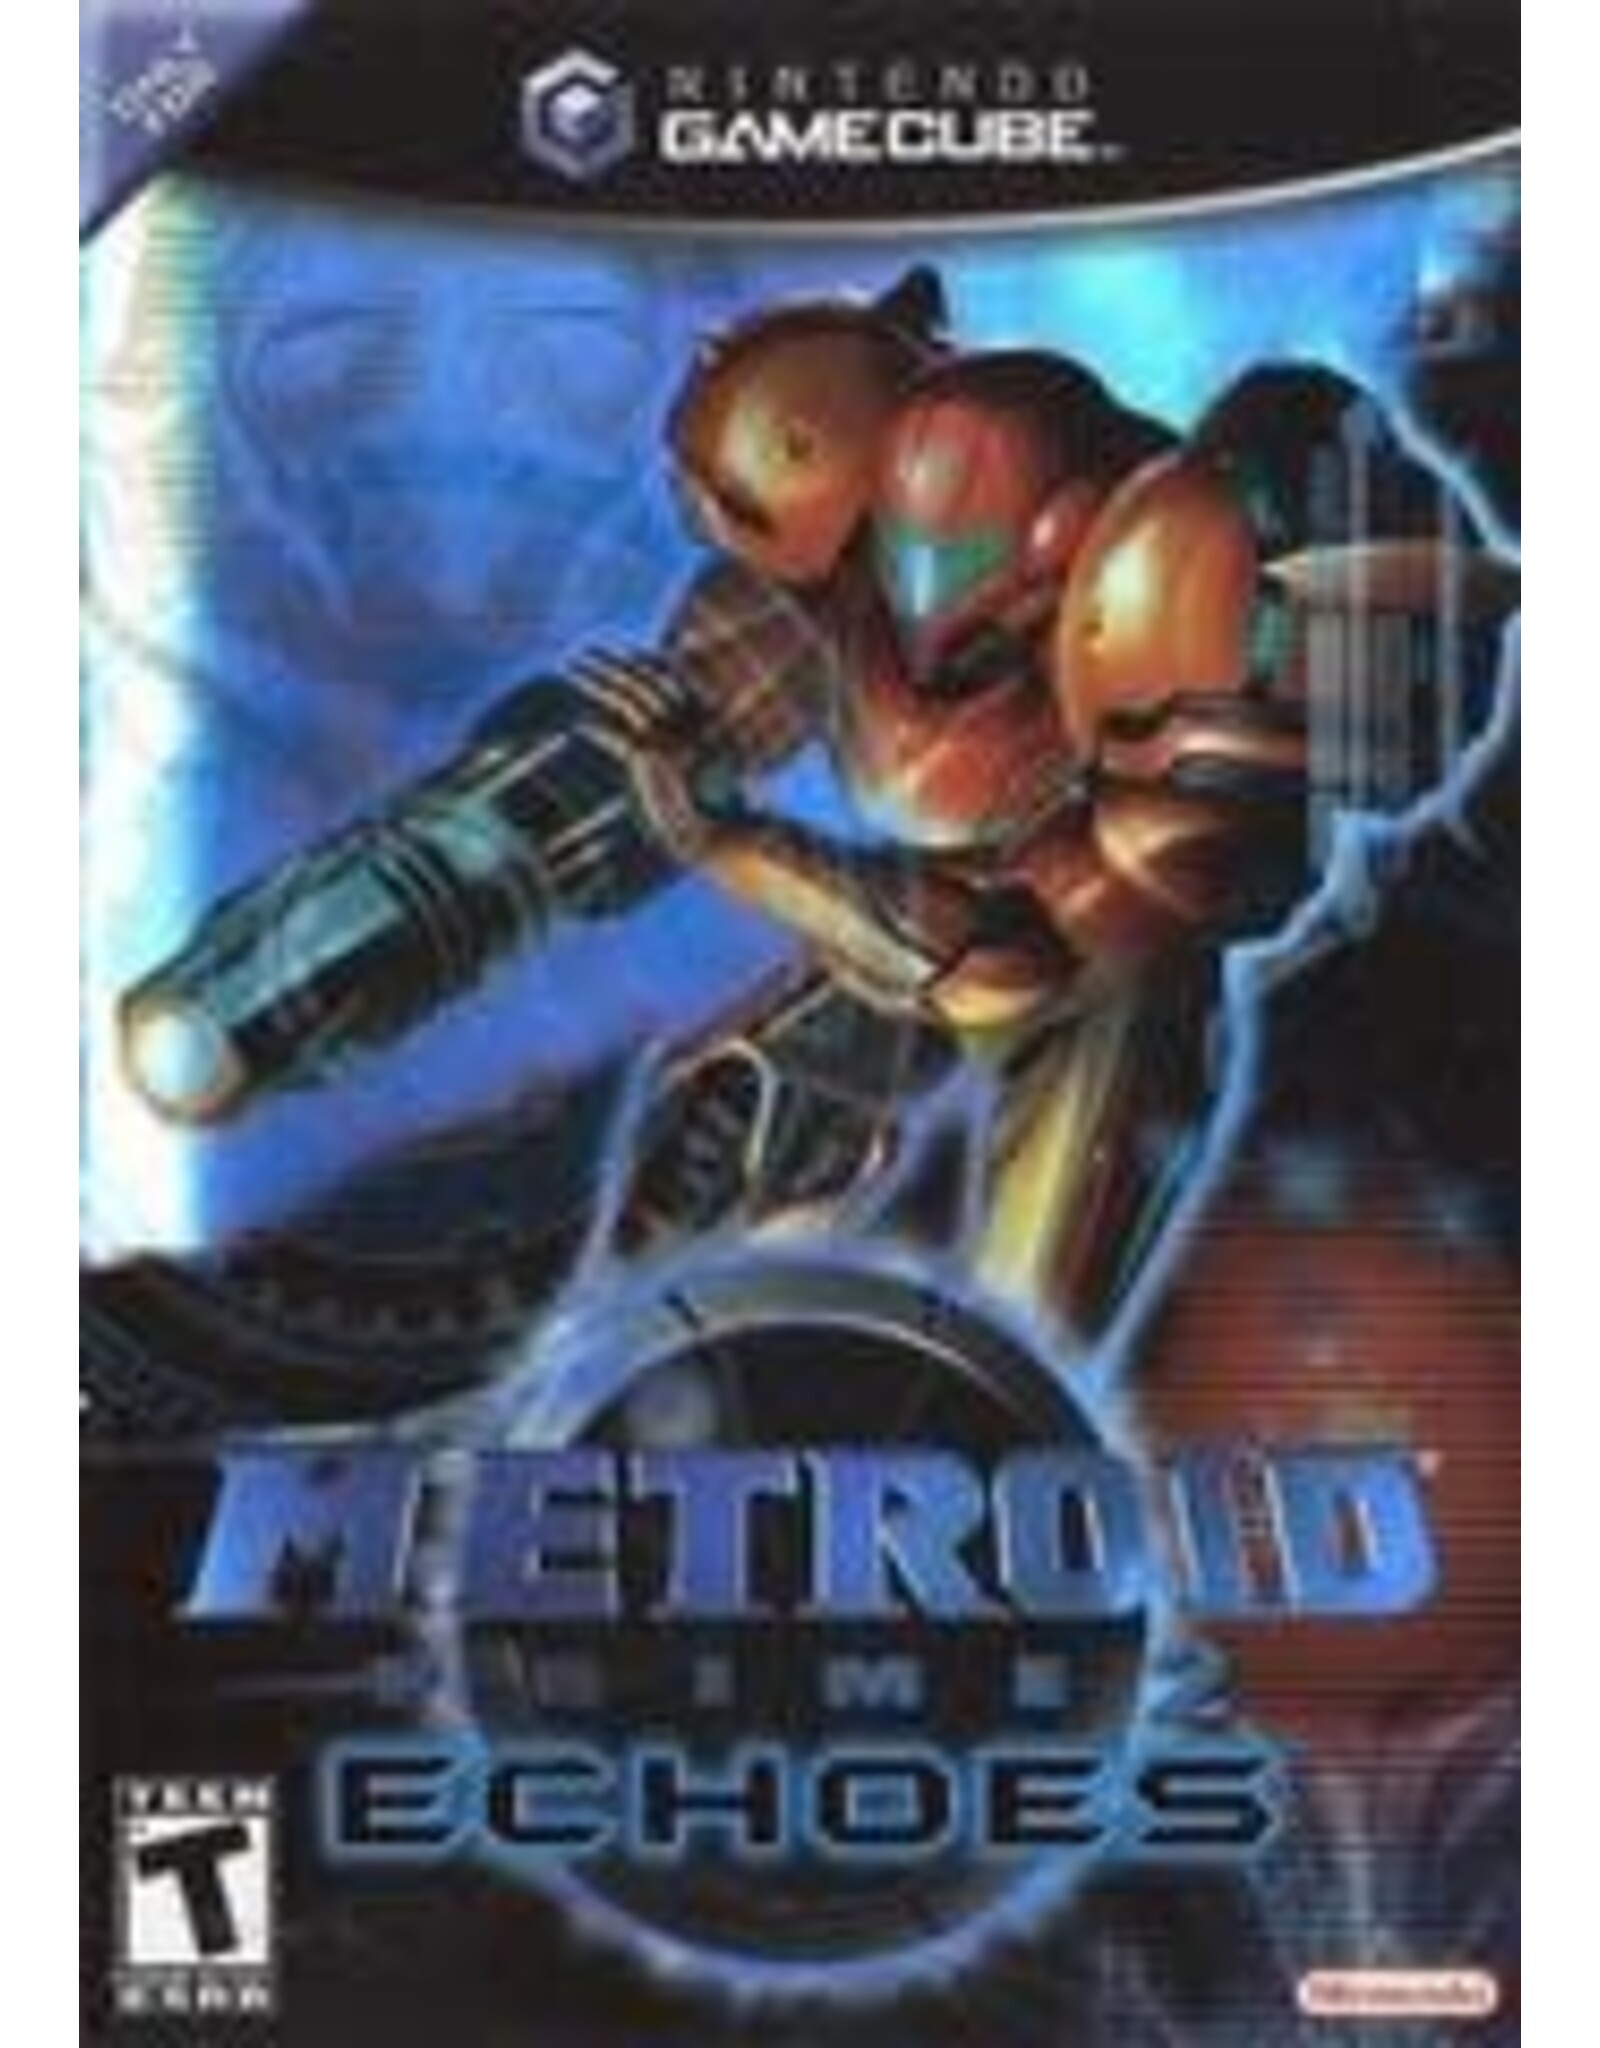 Gamecube Metroid Prime 2 Echoes (No Manual)